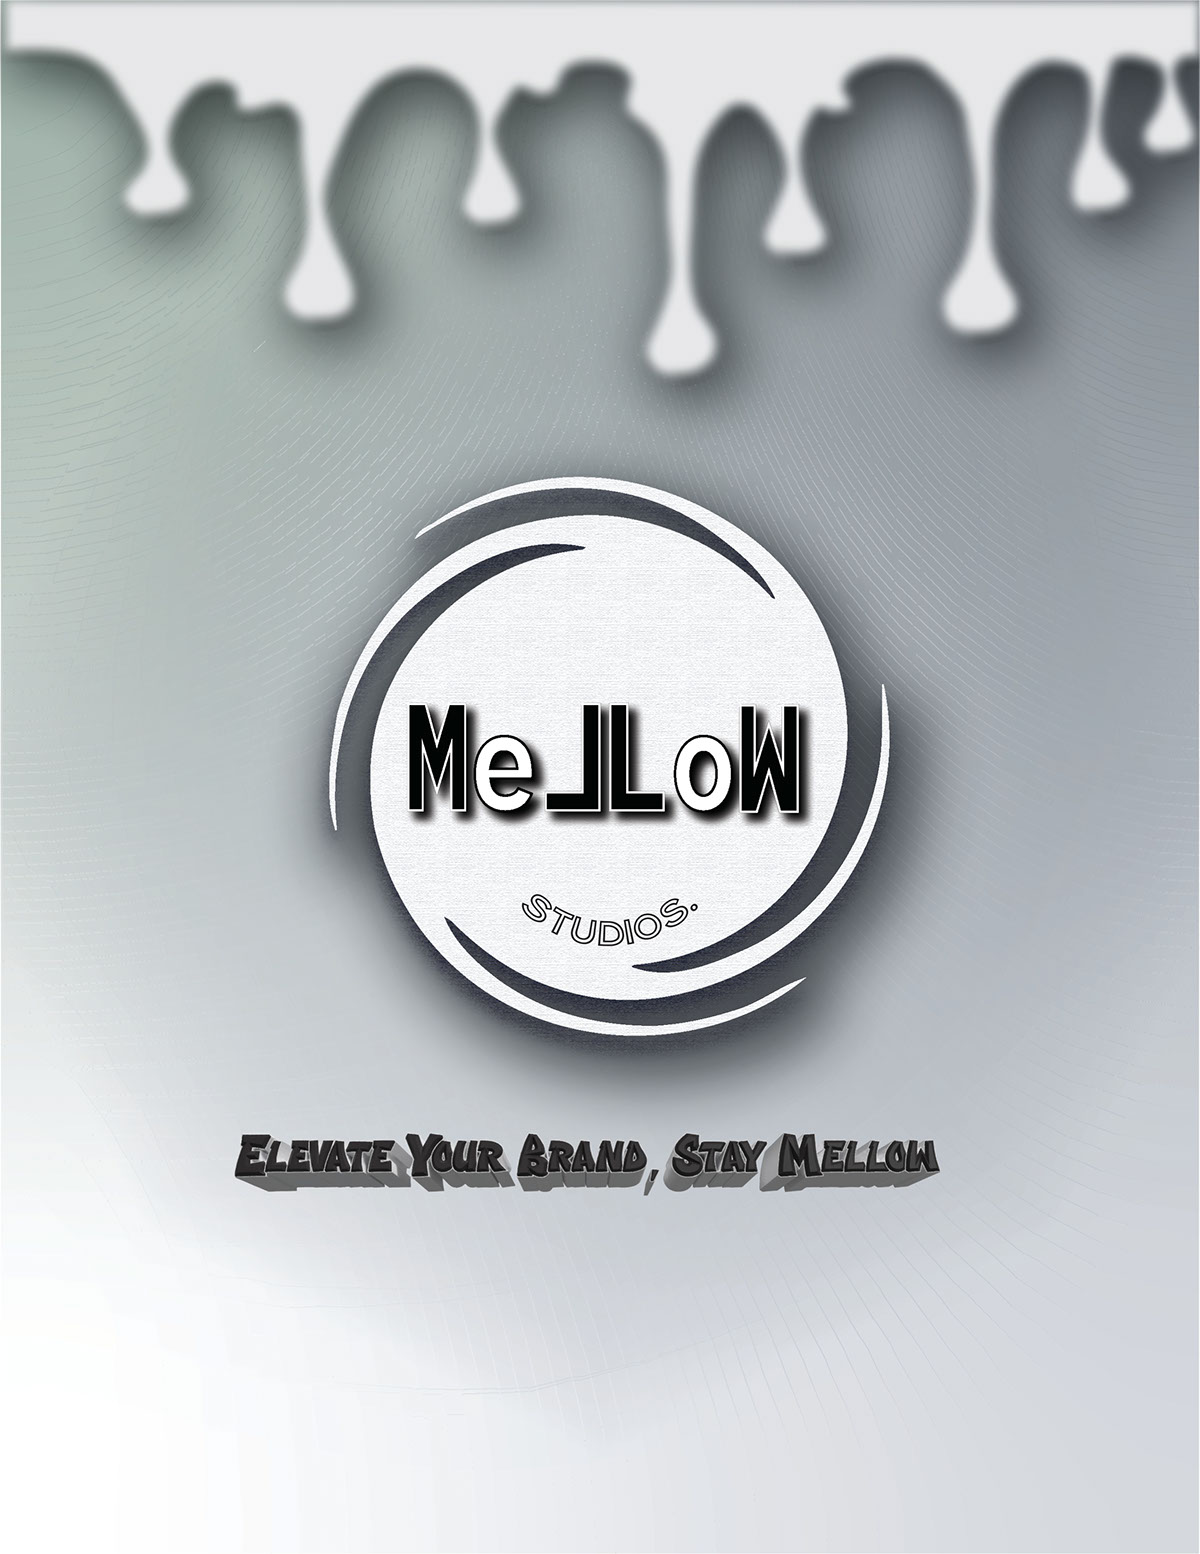 Mellow Studios rendition image